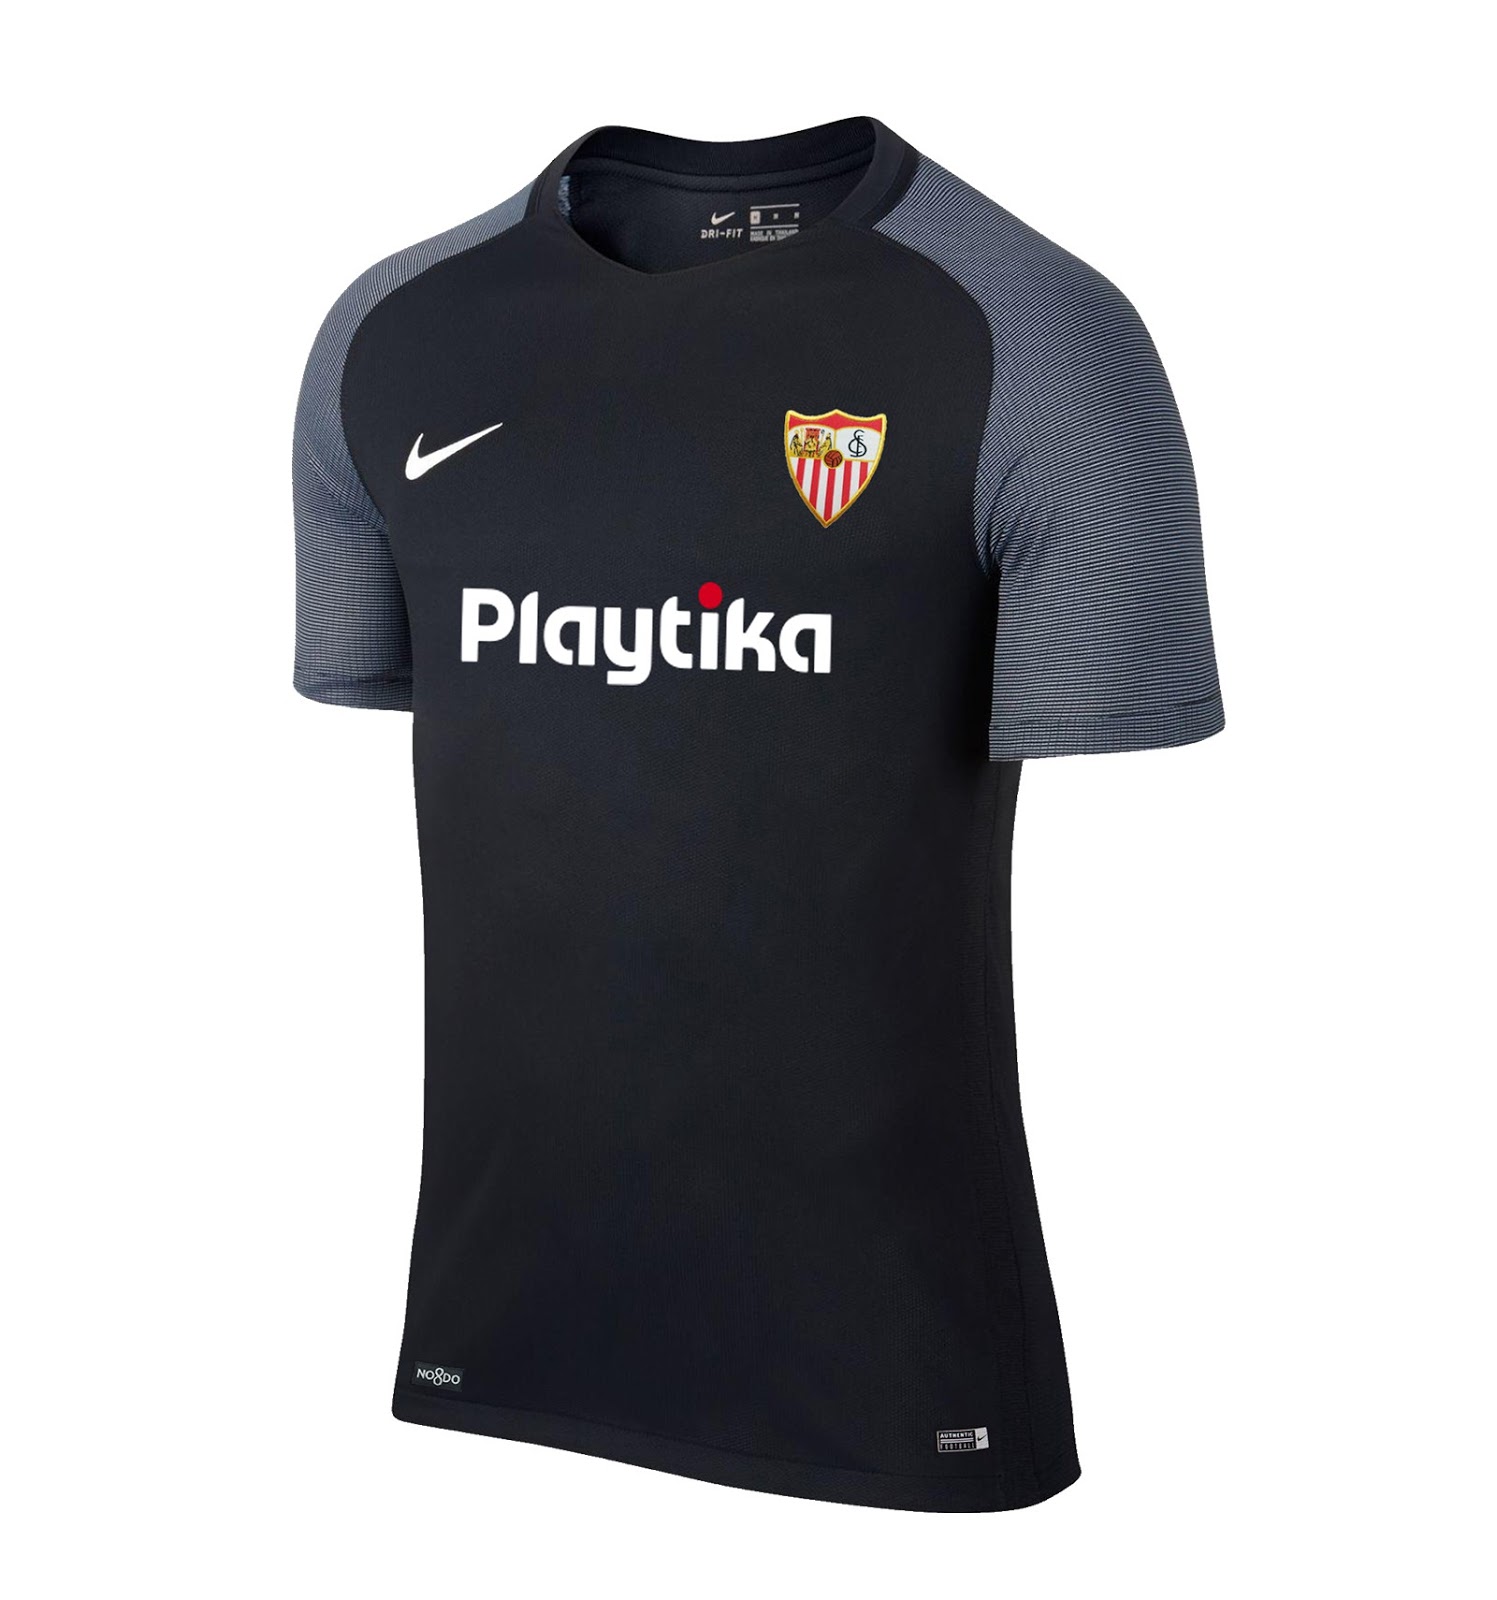 Camisetas Sevilla Nike 2018-2019 | JaviSFC.com